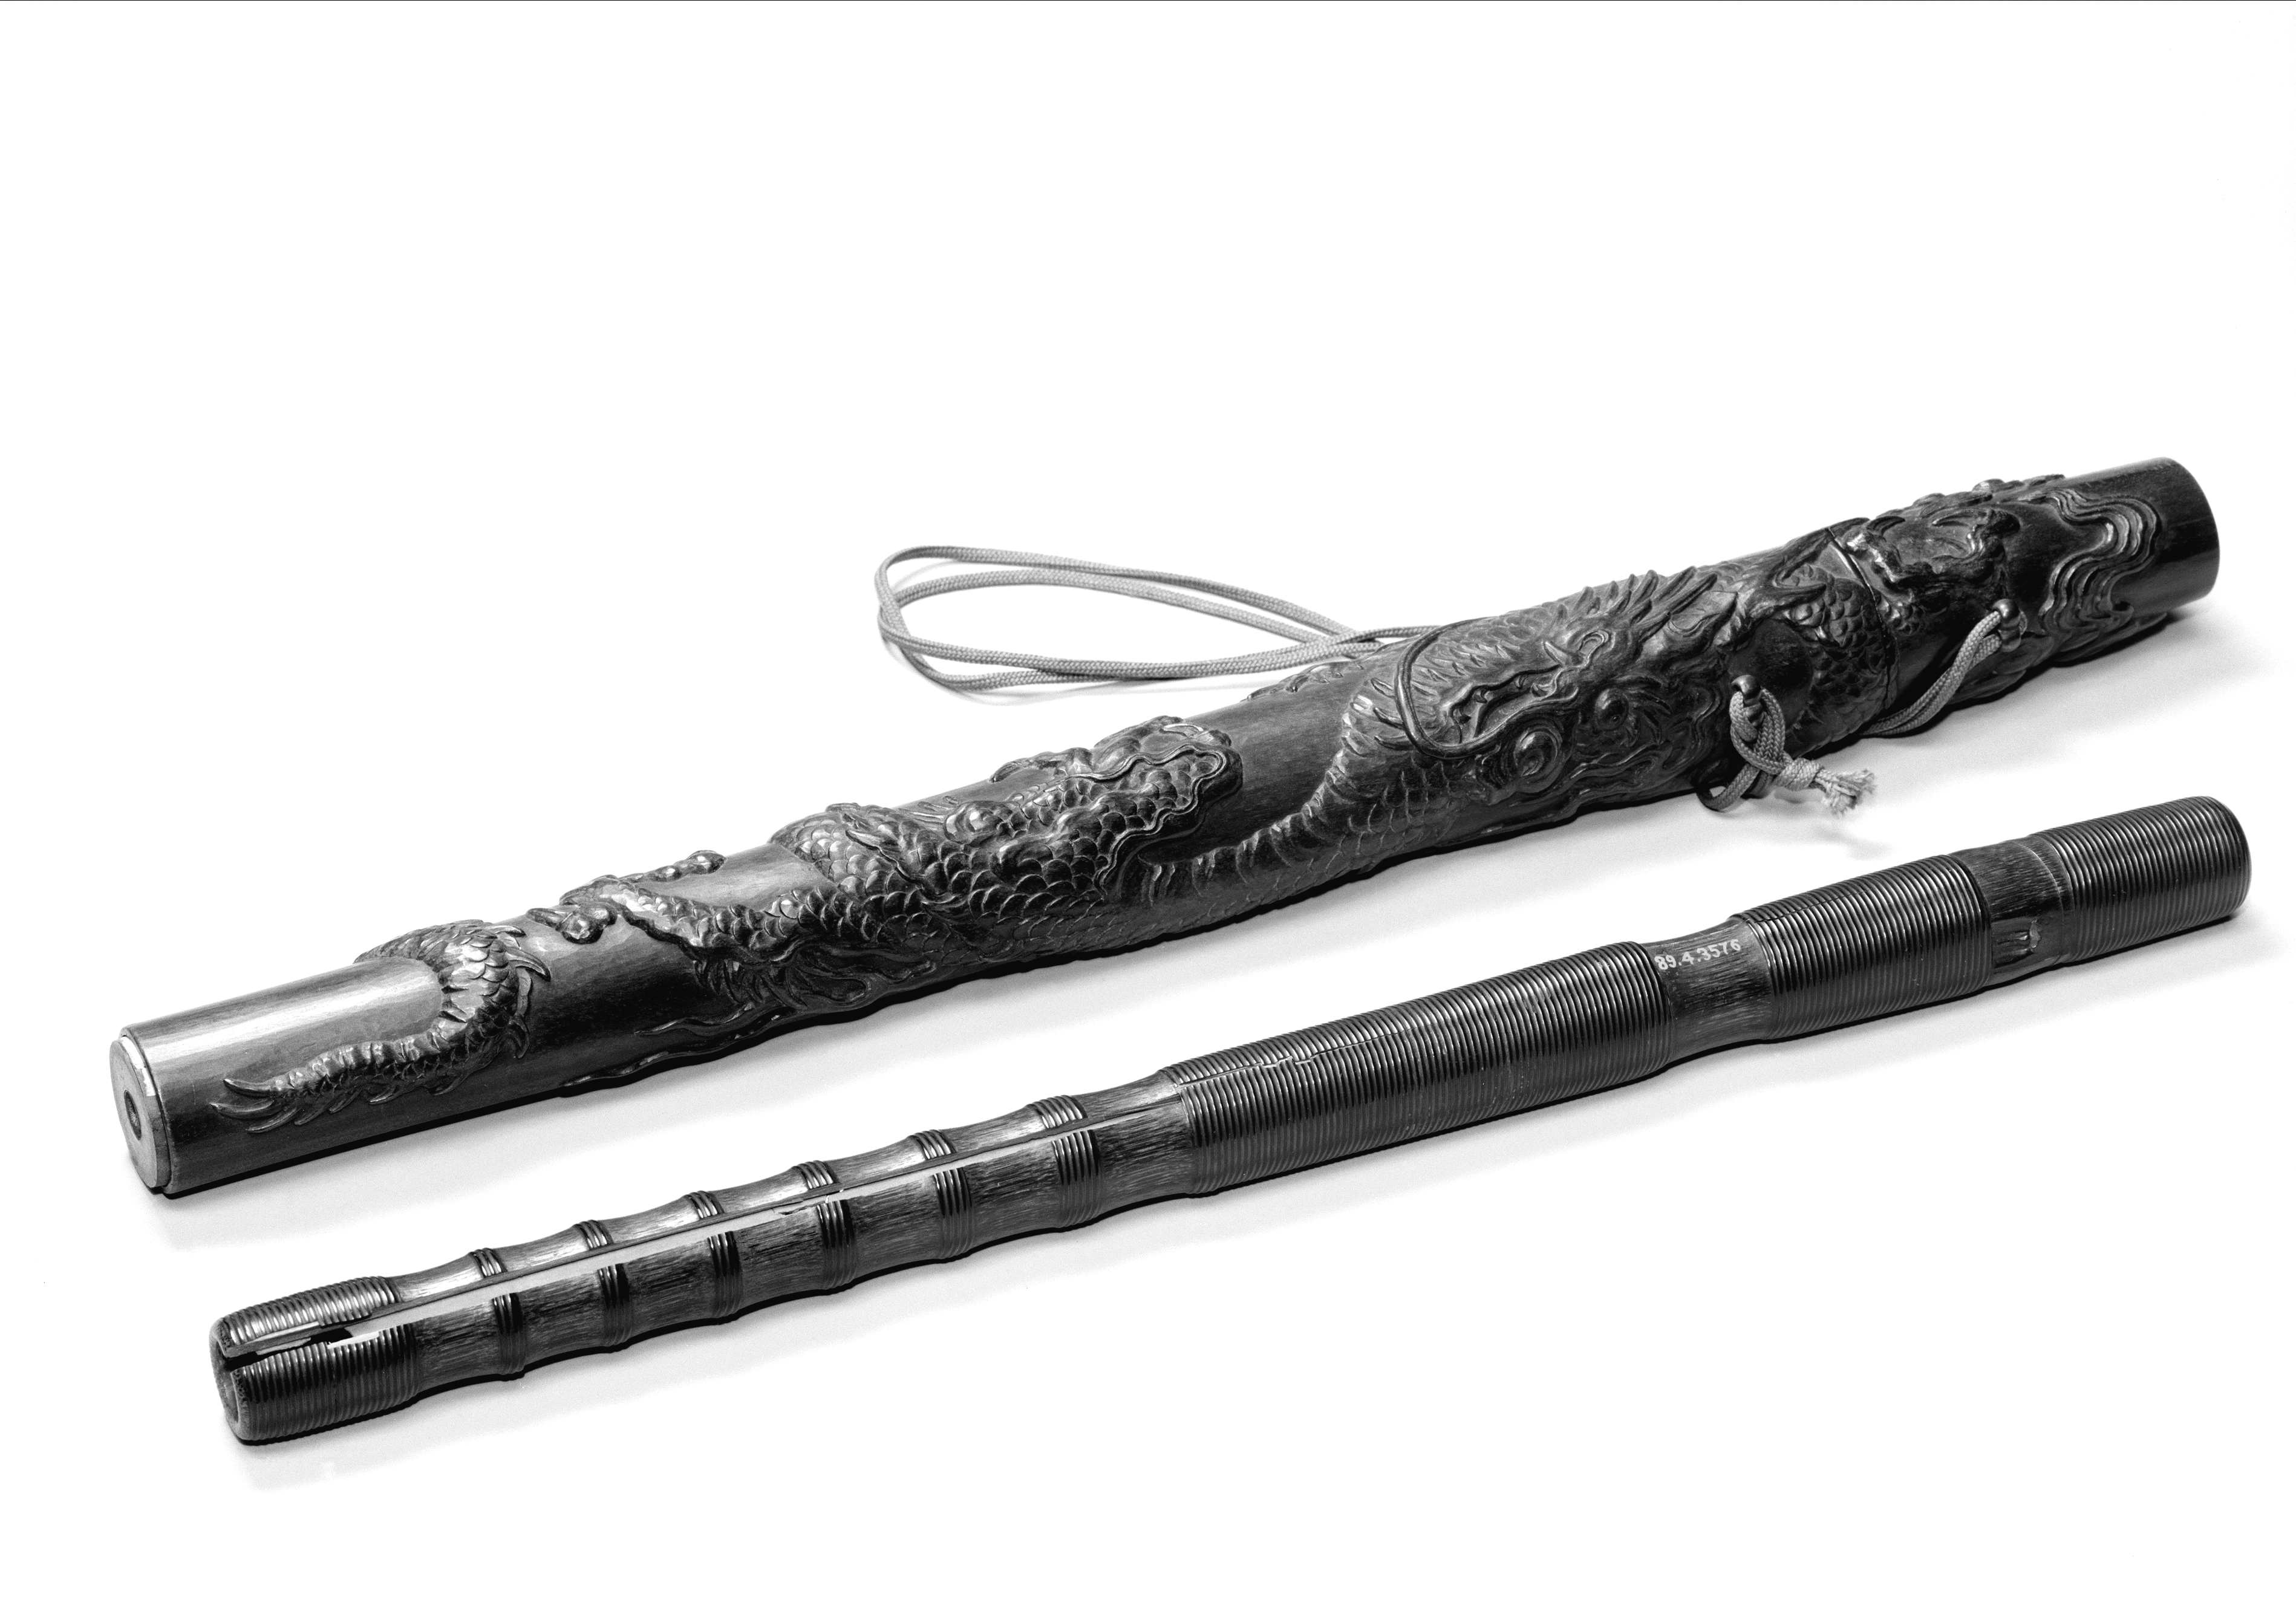 Ryuteki (龍笛 dragon flute), Japanese